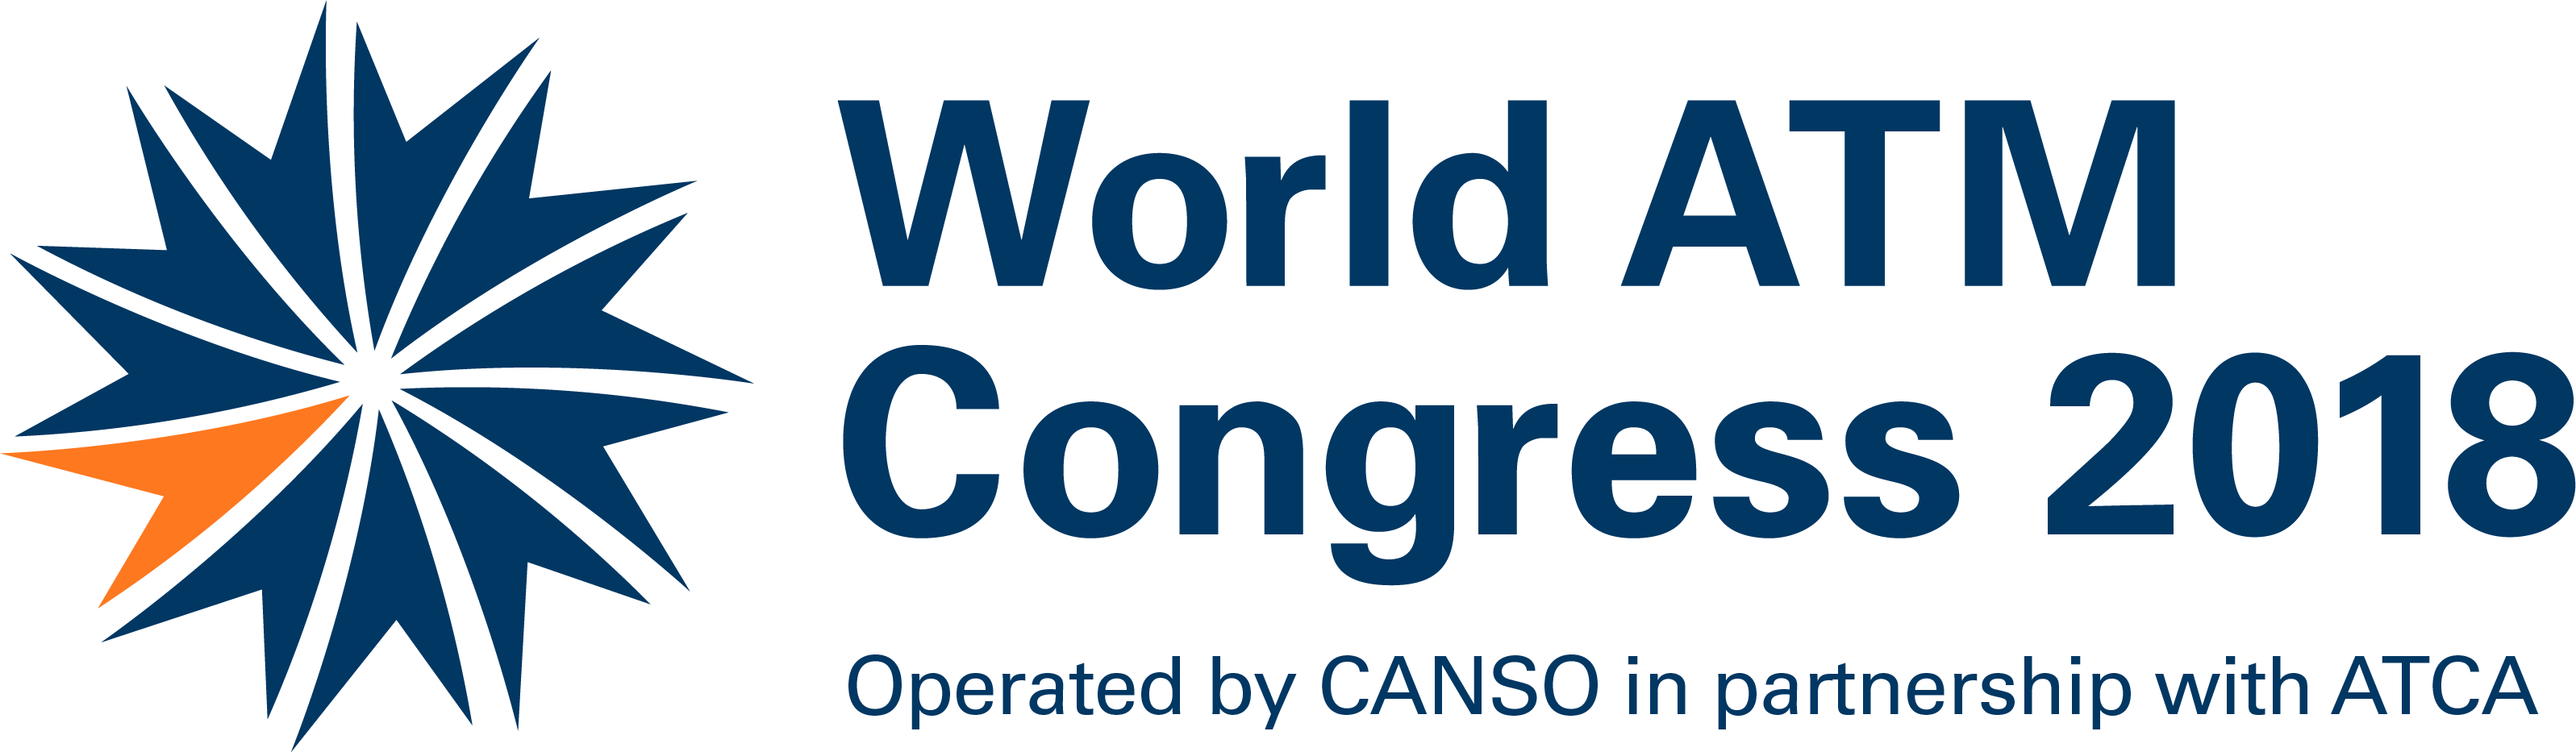 Download World Atm Congress 2018 Logo, No Dates Eps - World Atm Congress 2018 (3194x933), Png Download